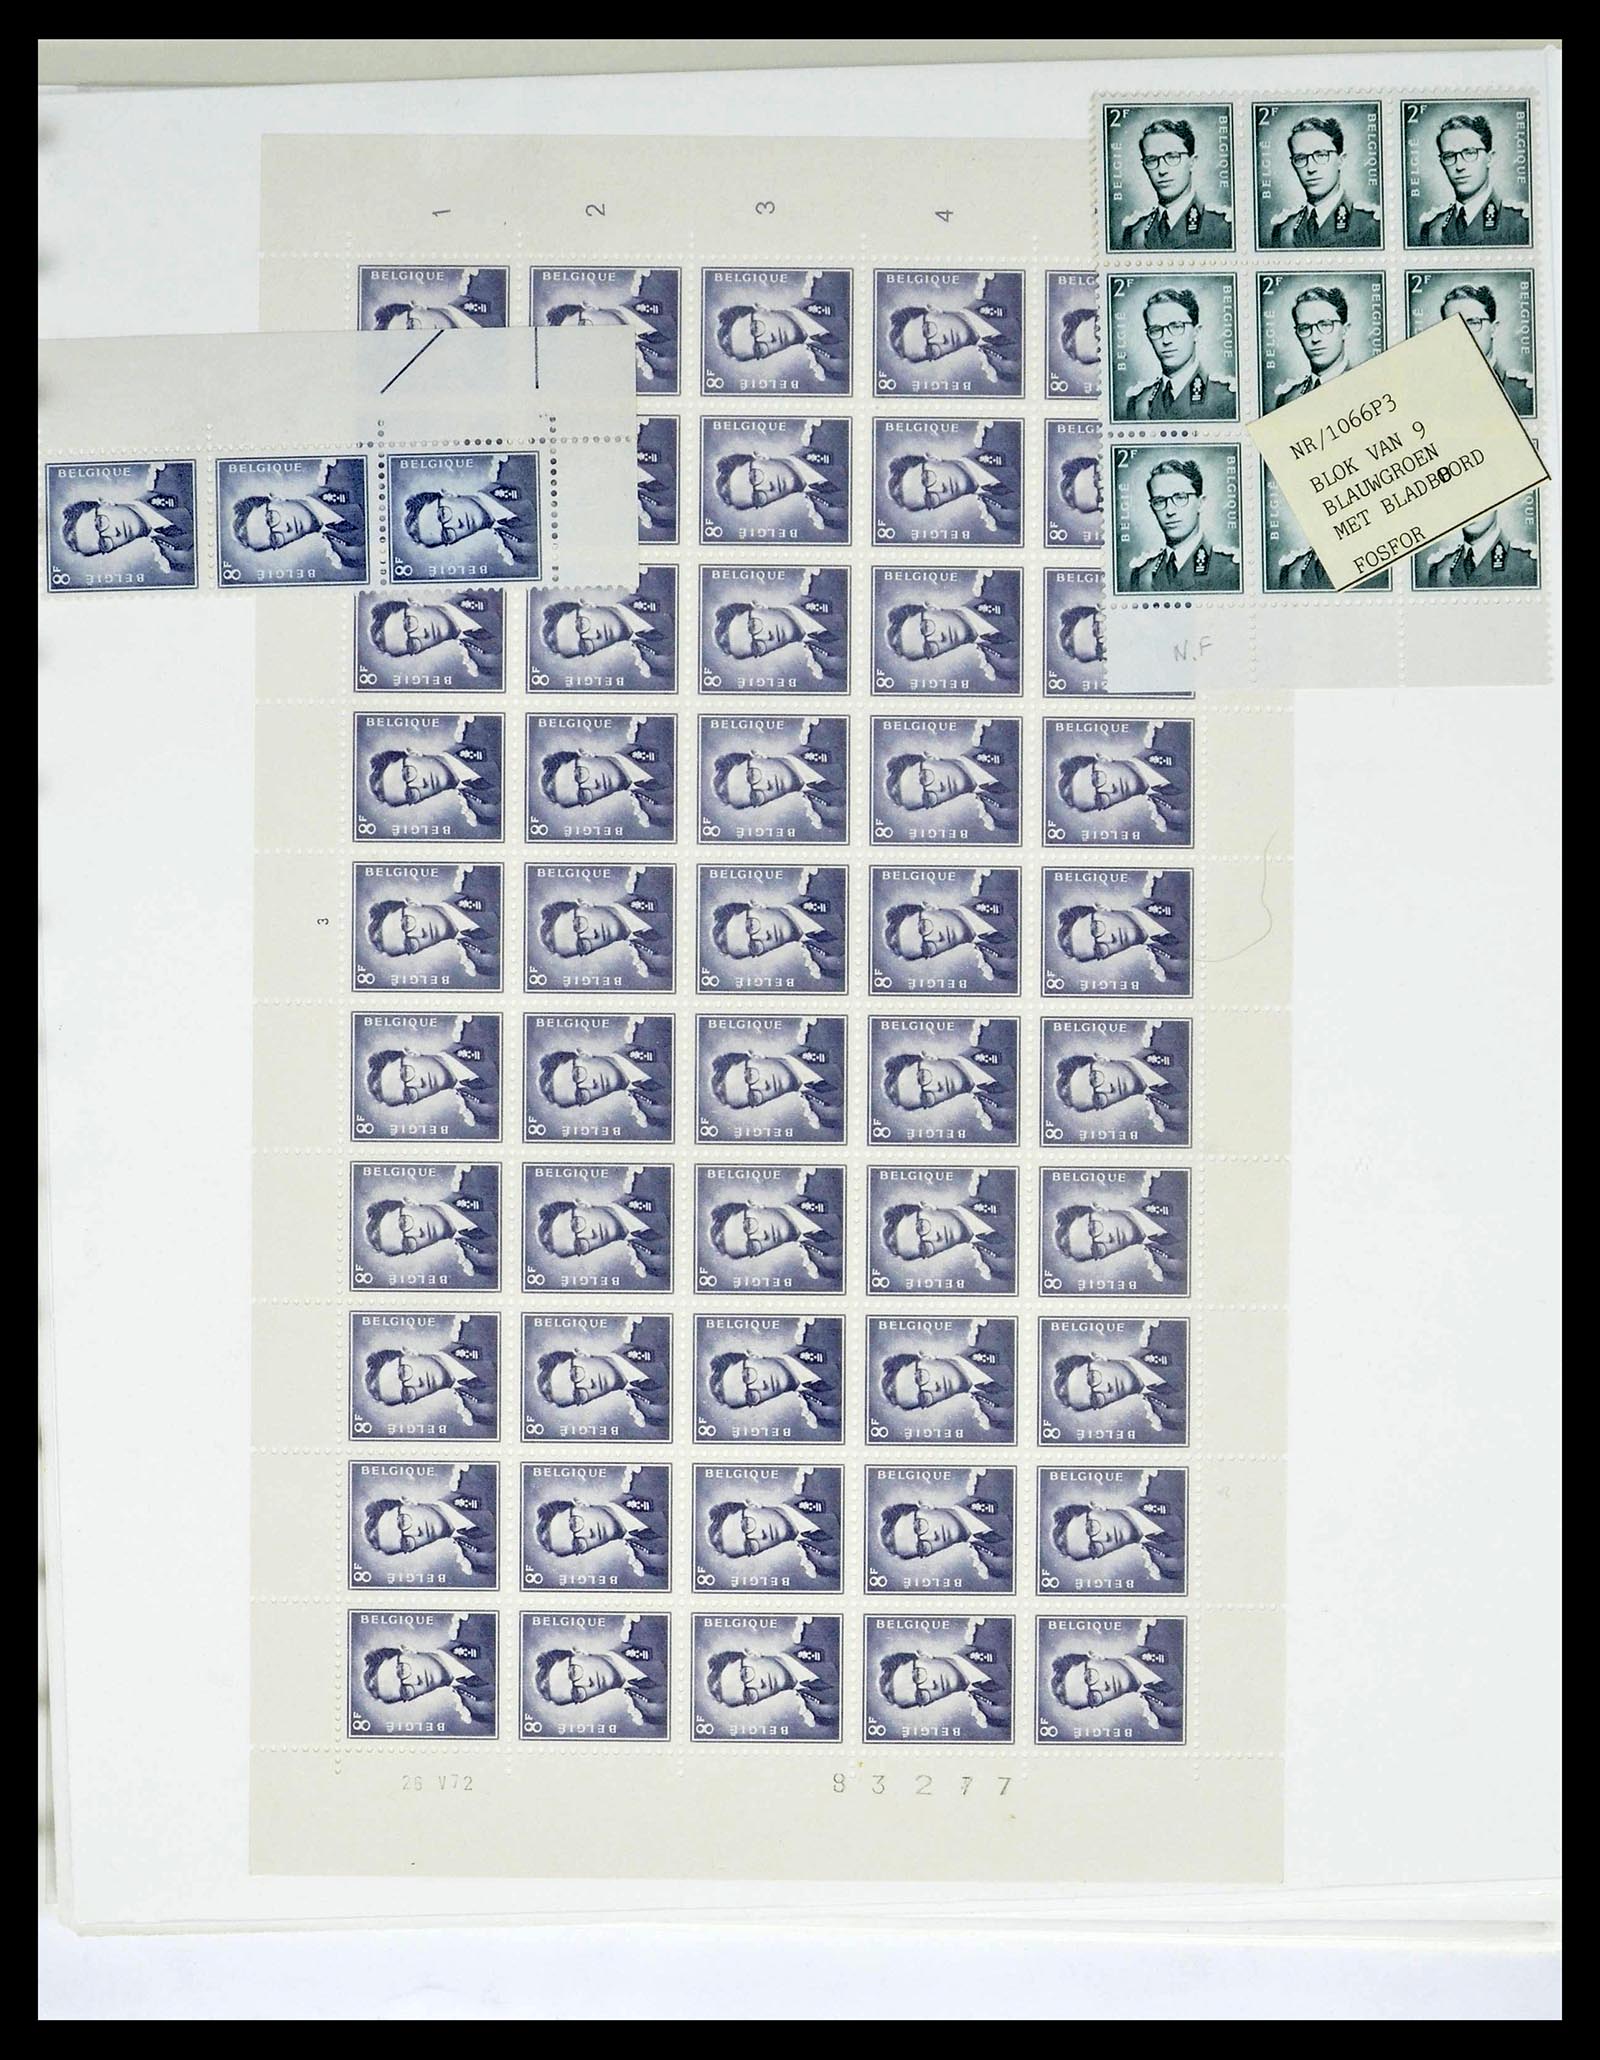 39229 0046 - Stamp collection 39229 Belgium Boudewijn with glasses 1952-1975.